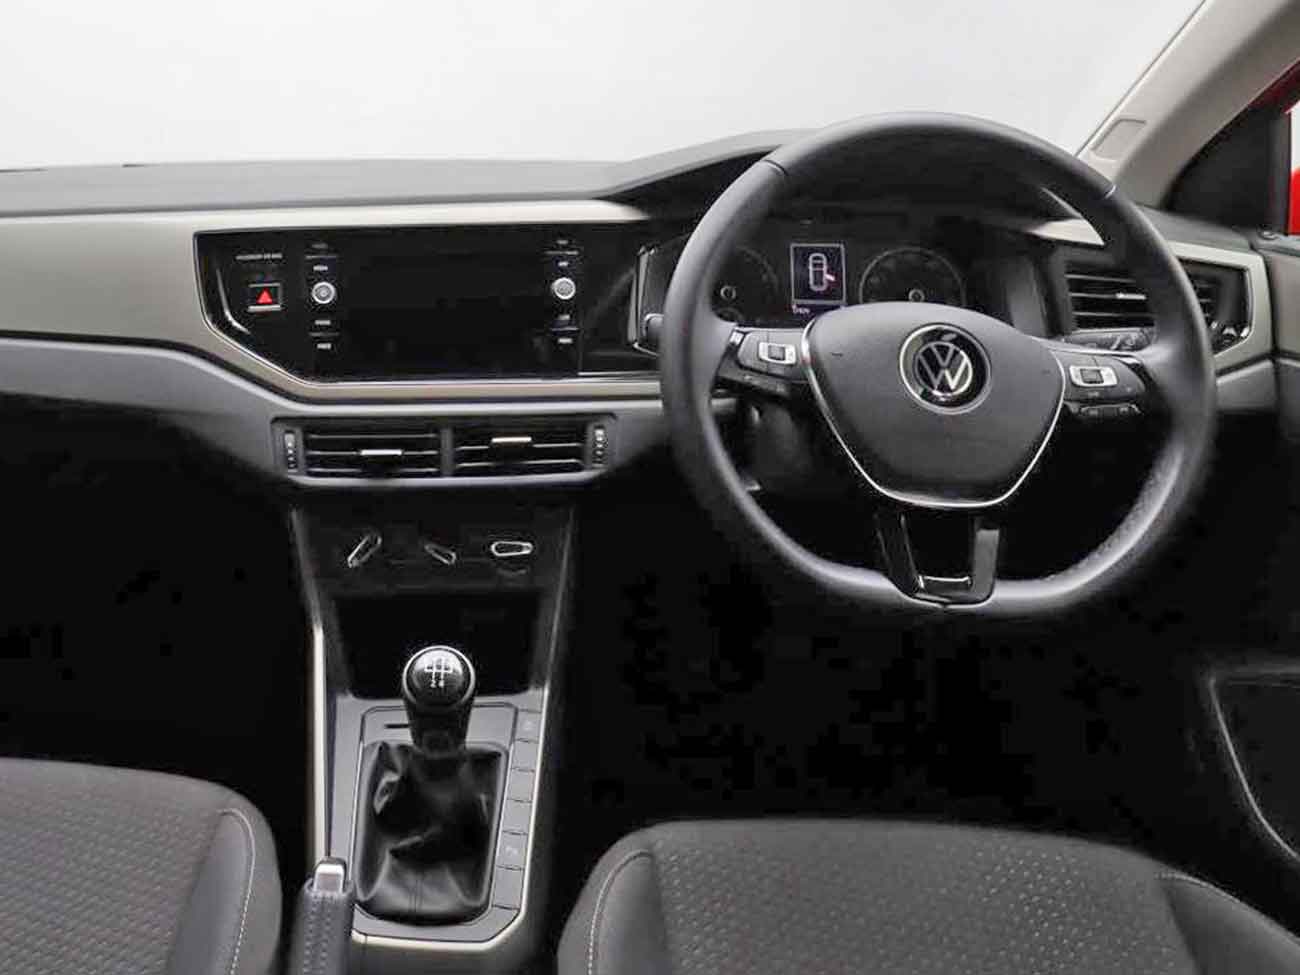 Interior view of VW Polo